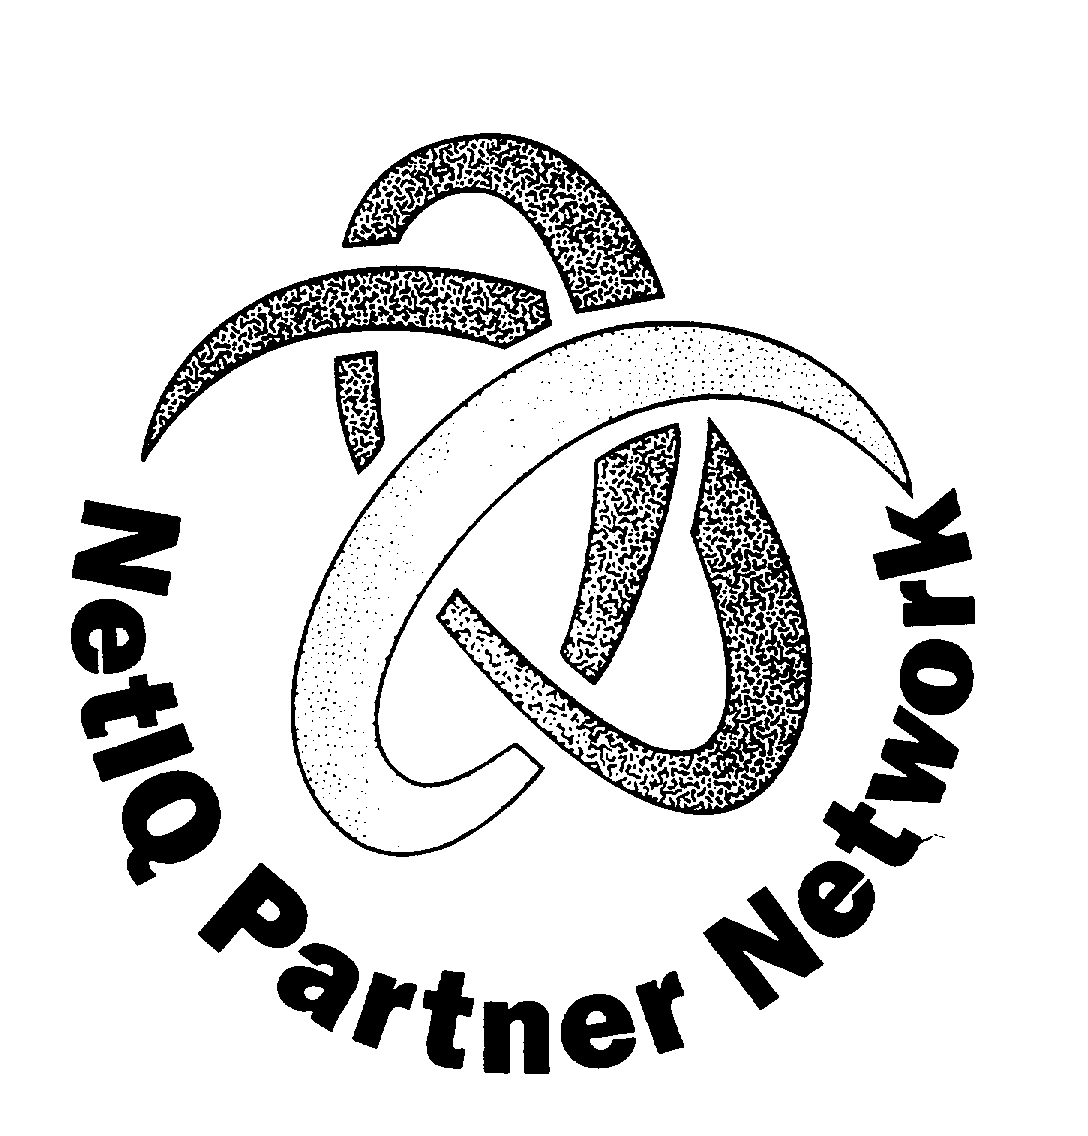  NETIQ PARTNER NETWORK